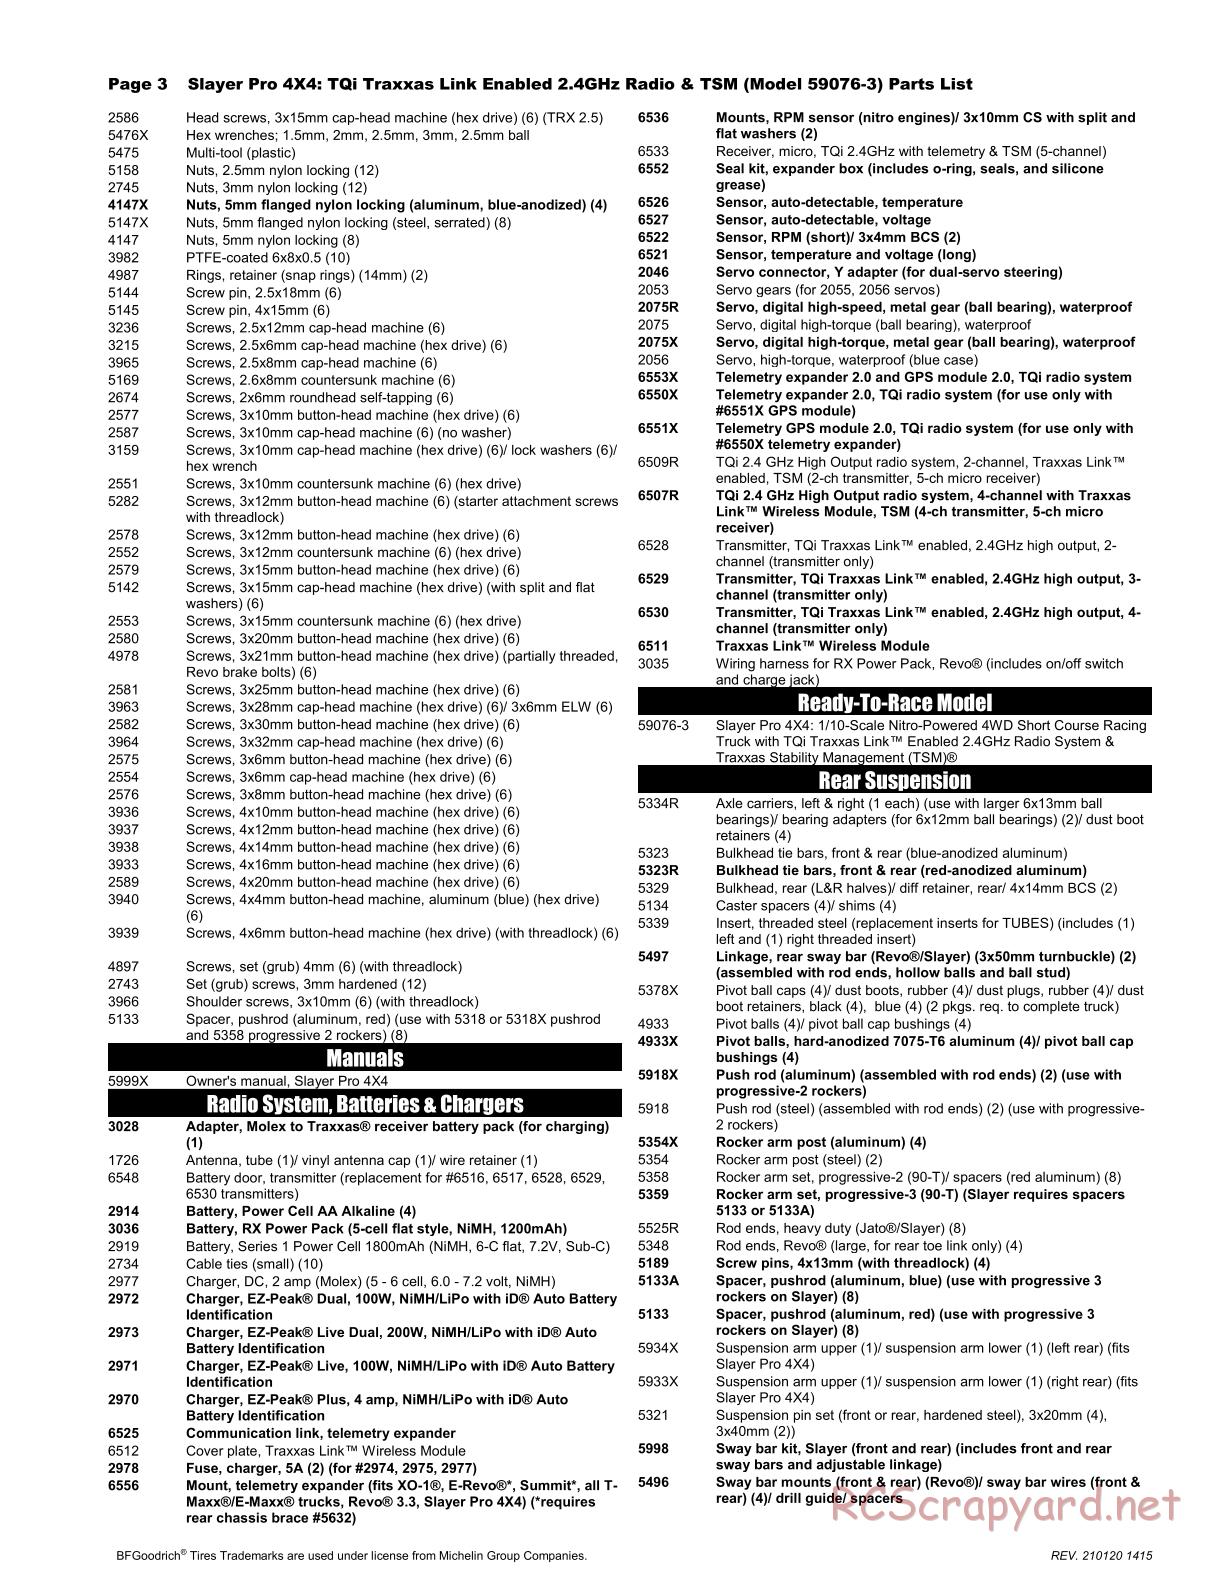 Traxxas - Slayer Pro 4x4 TSM - Parts List - Page 3